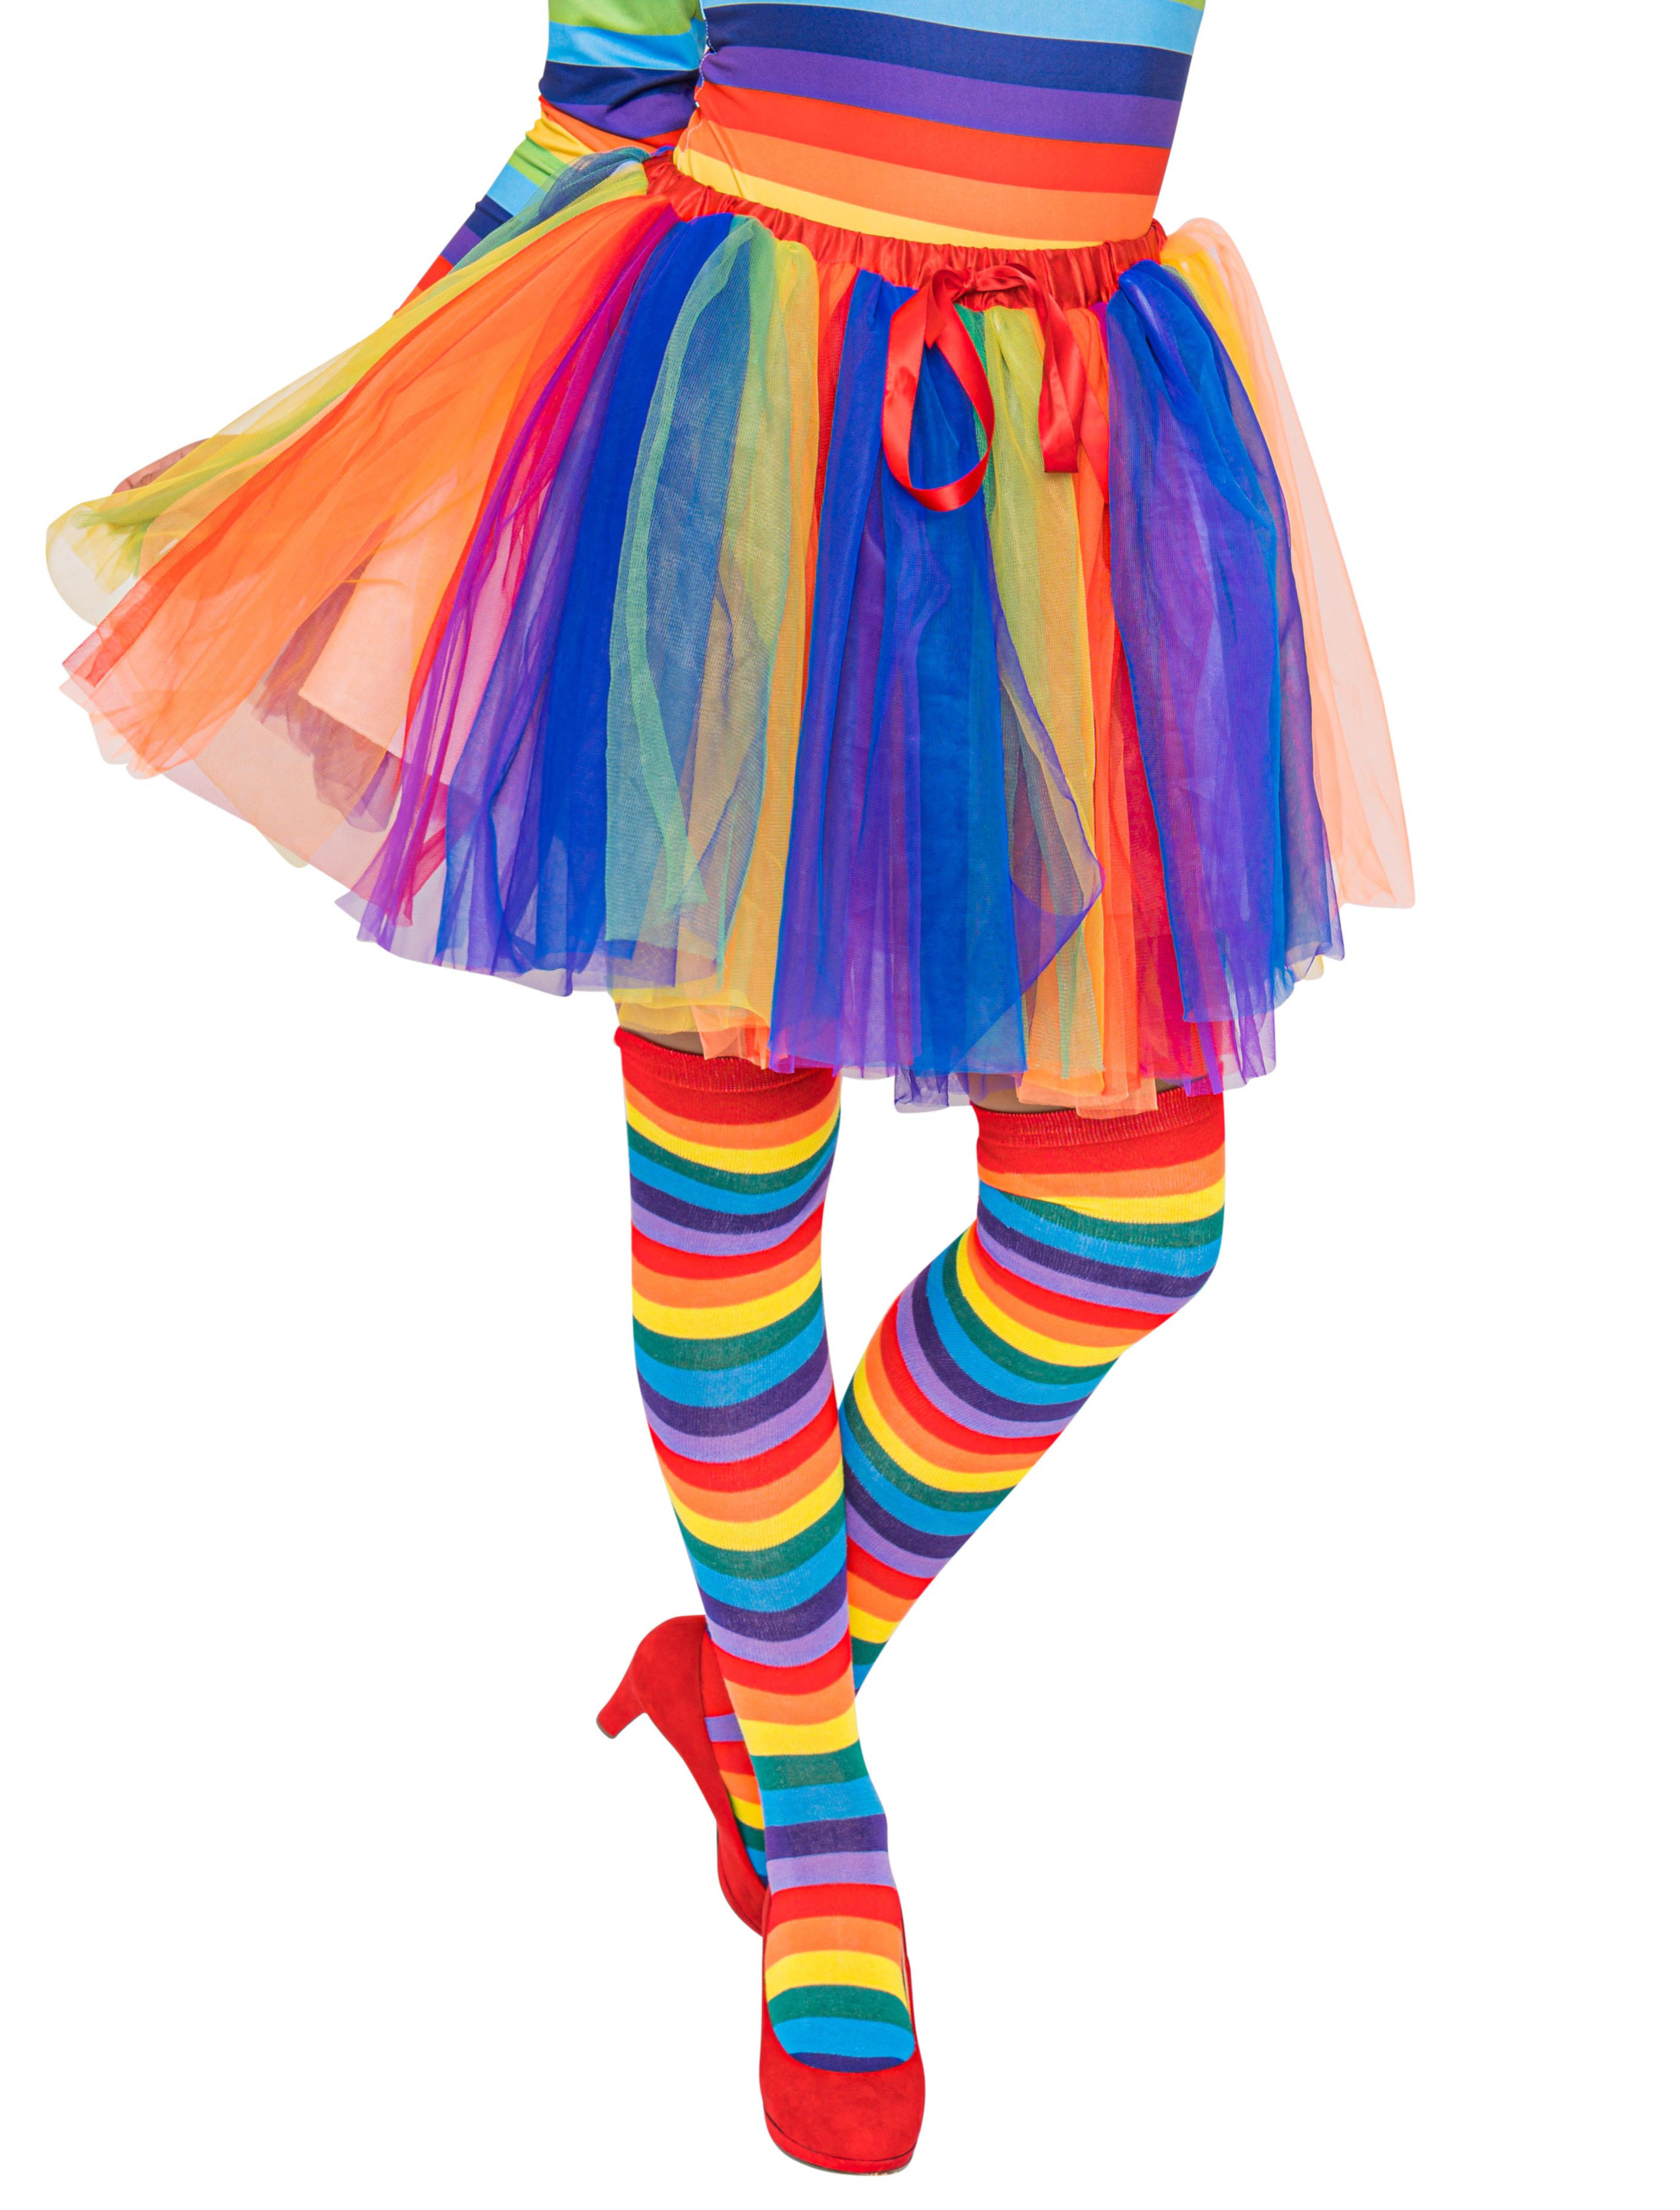 Petticoat Rainbow